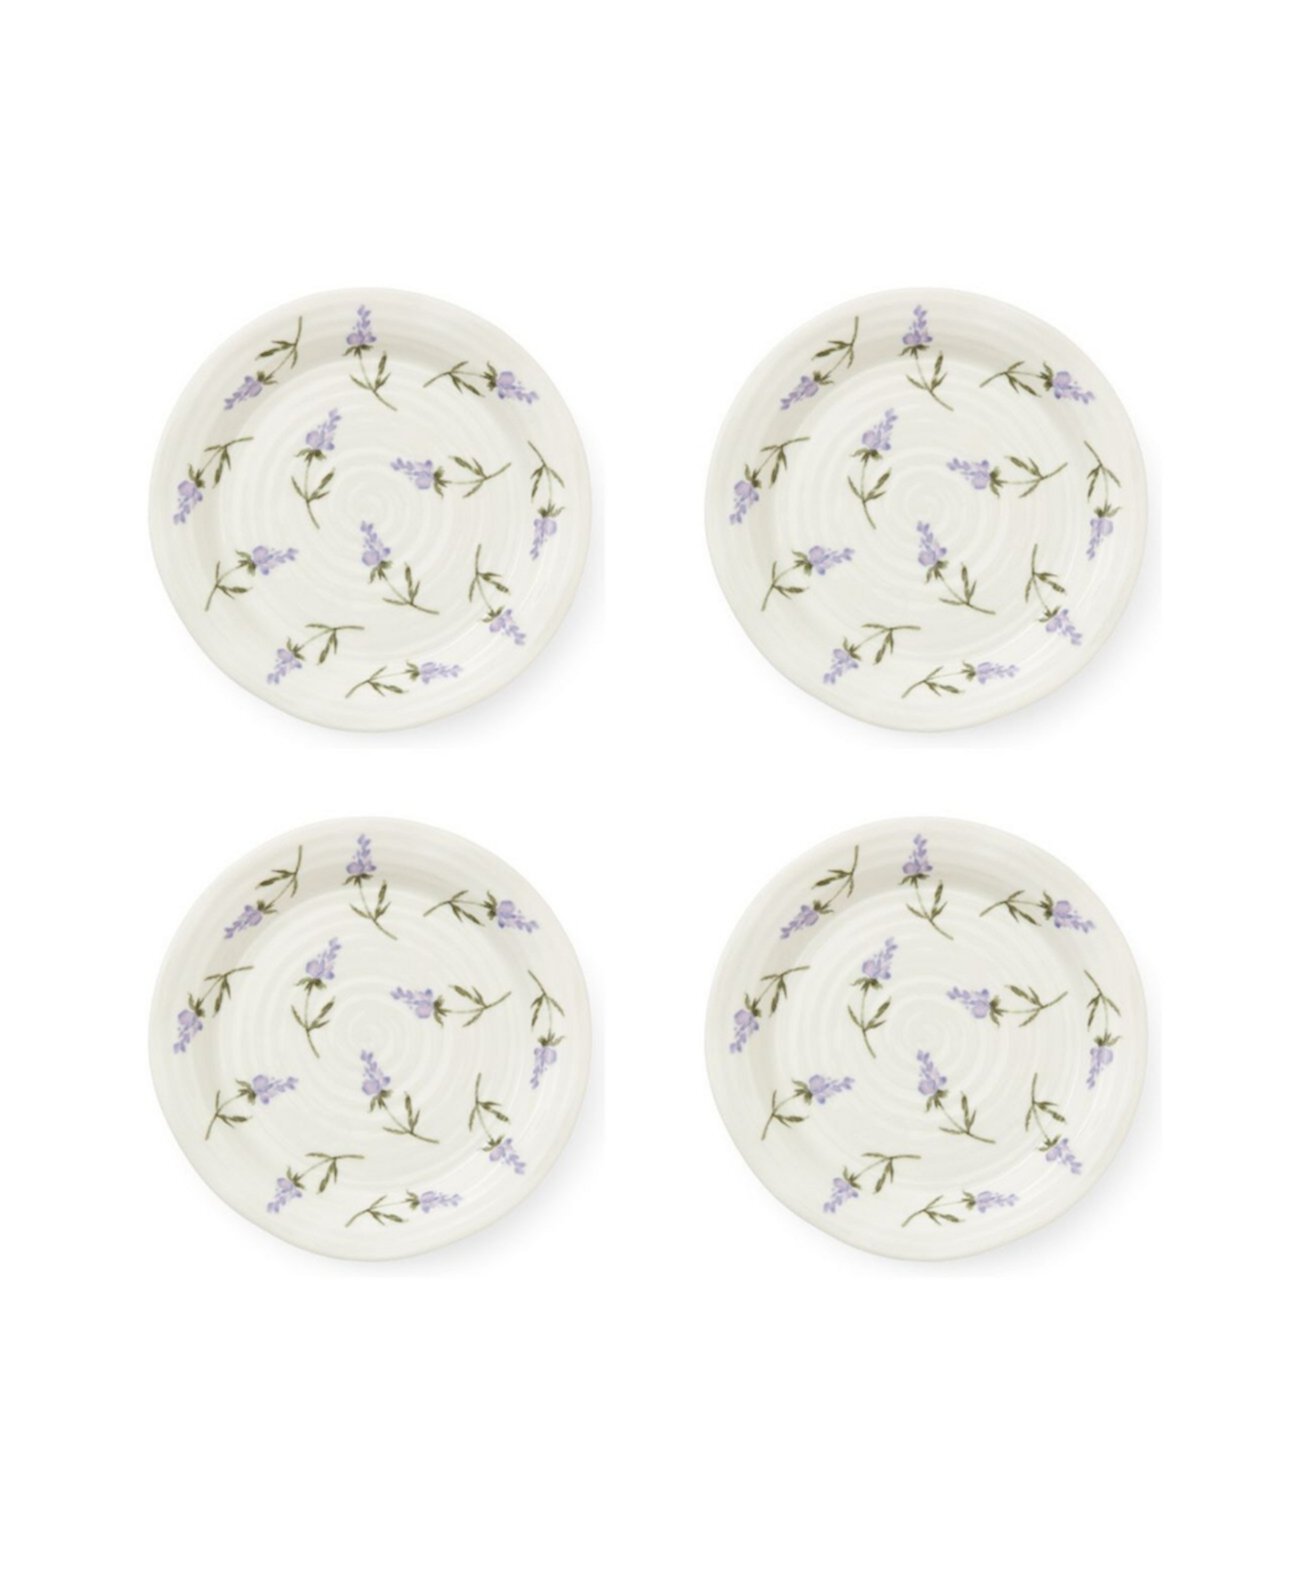 Sophie Conran Боковые тарелки лаванды, набор из 4 шт. Portmeirion